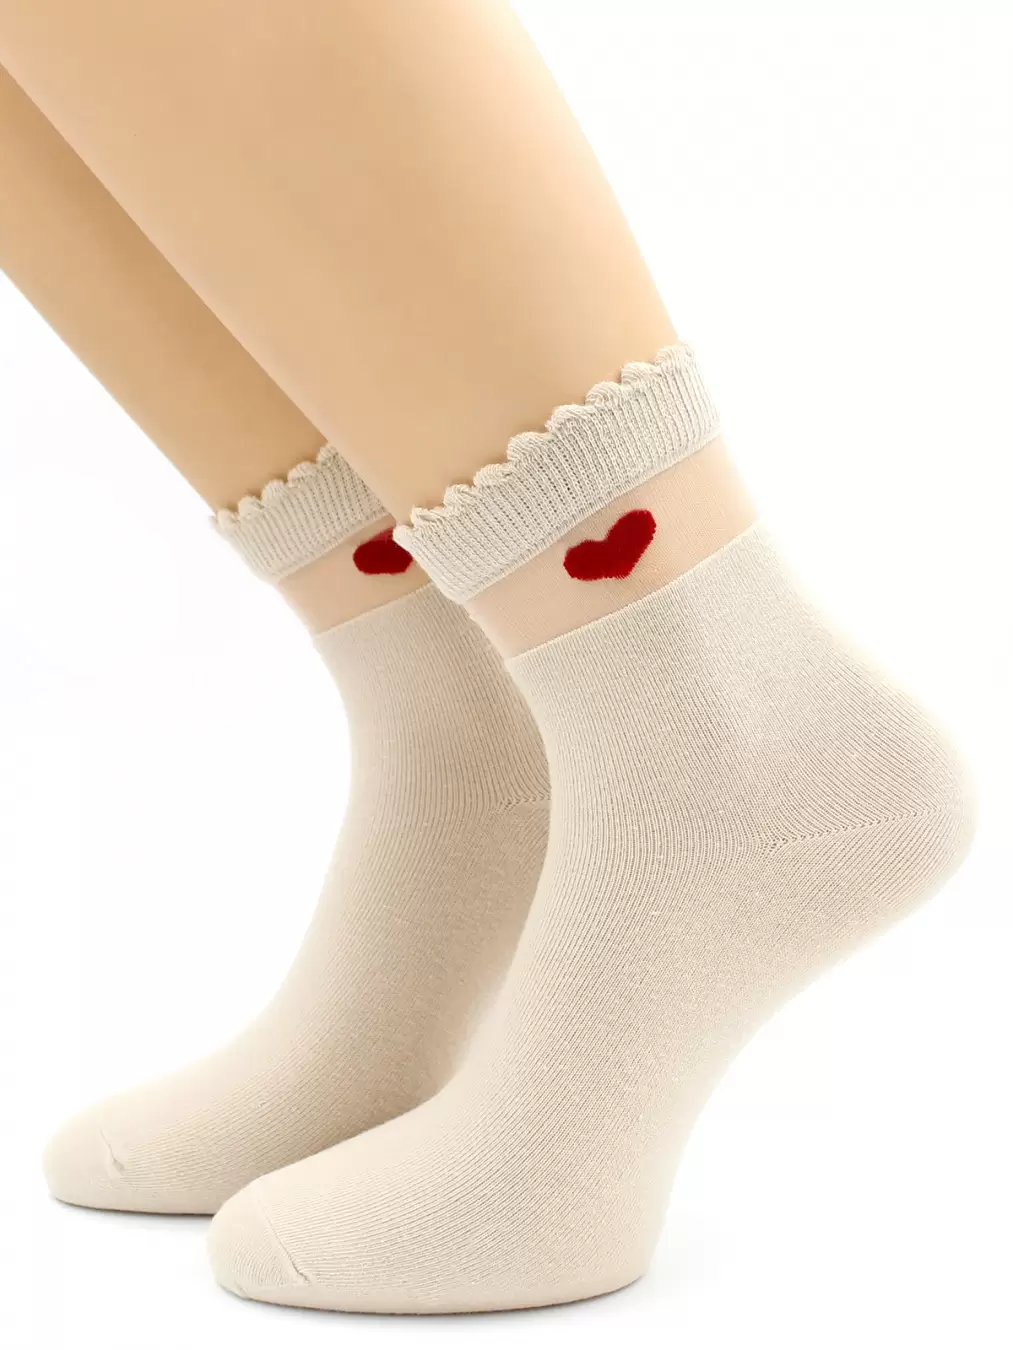 Hobby Line 2032, носки женские сердечки (изображение 1)